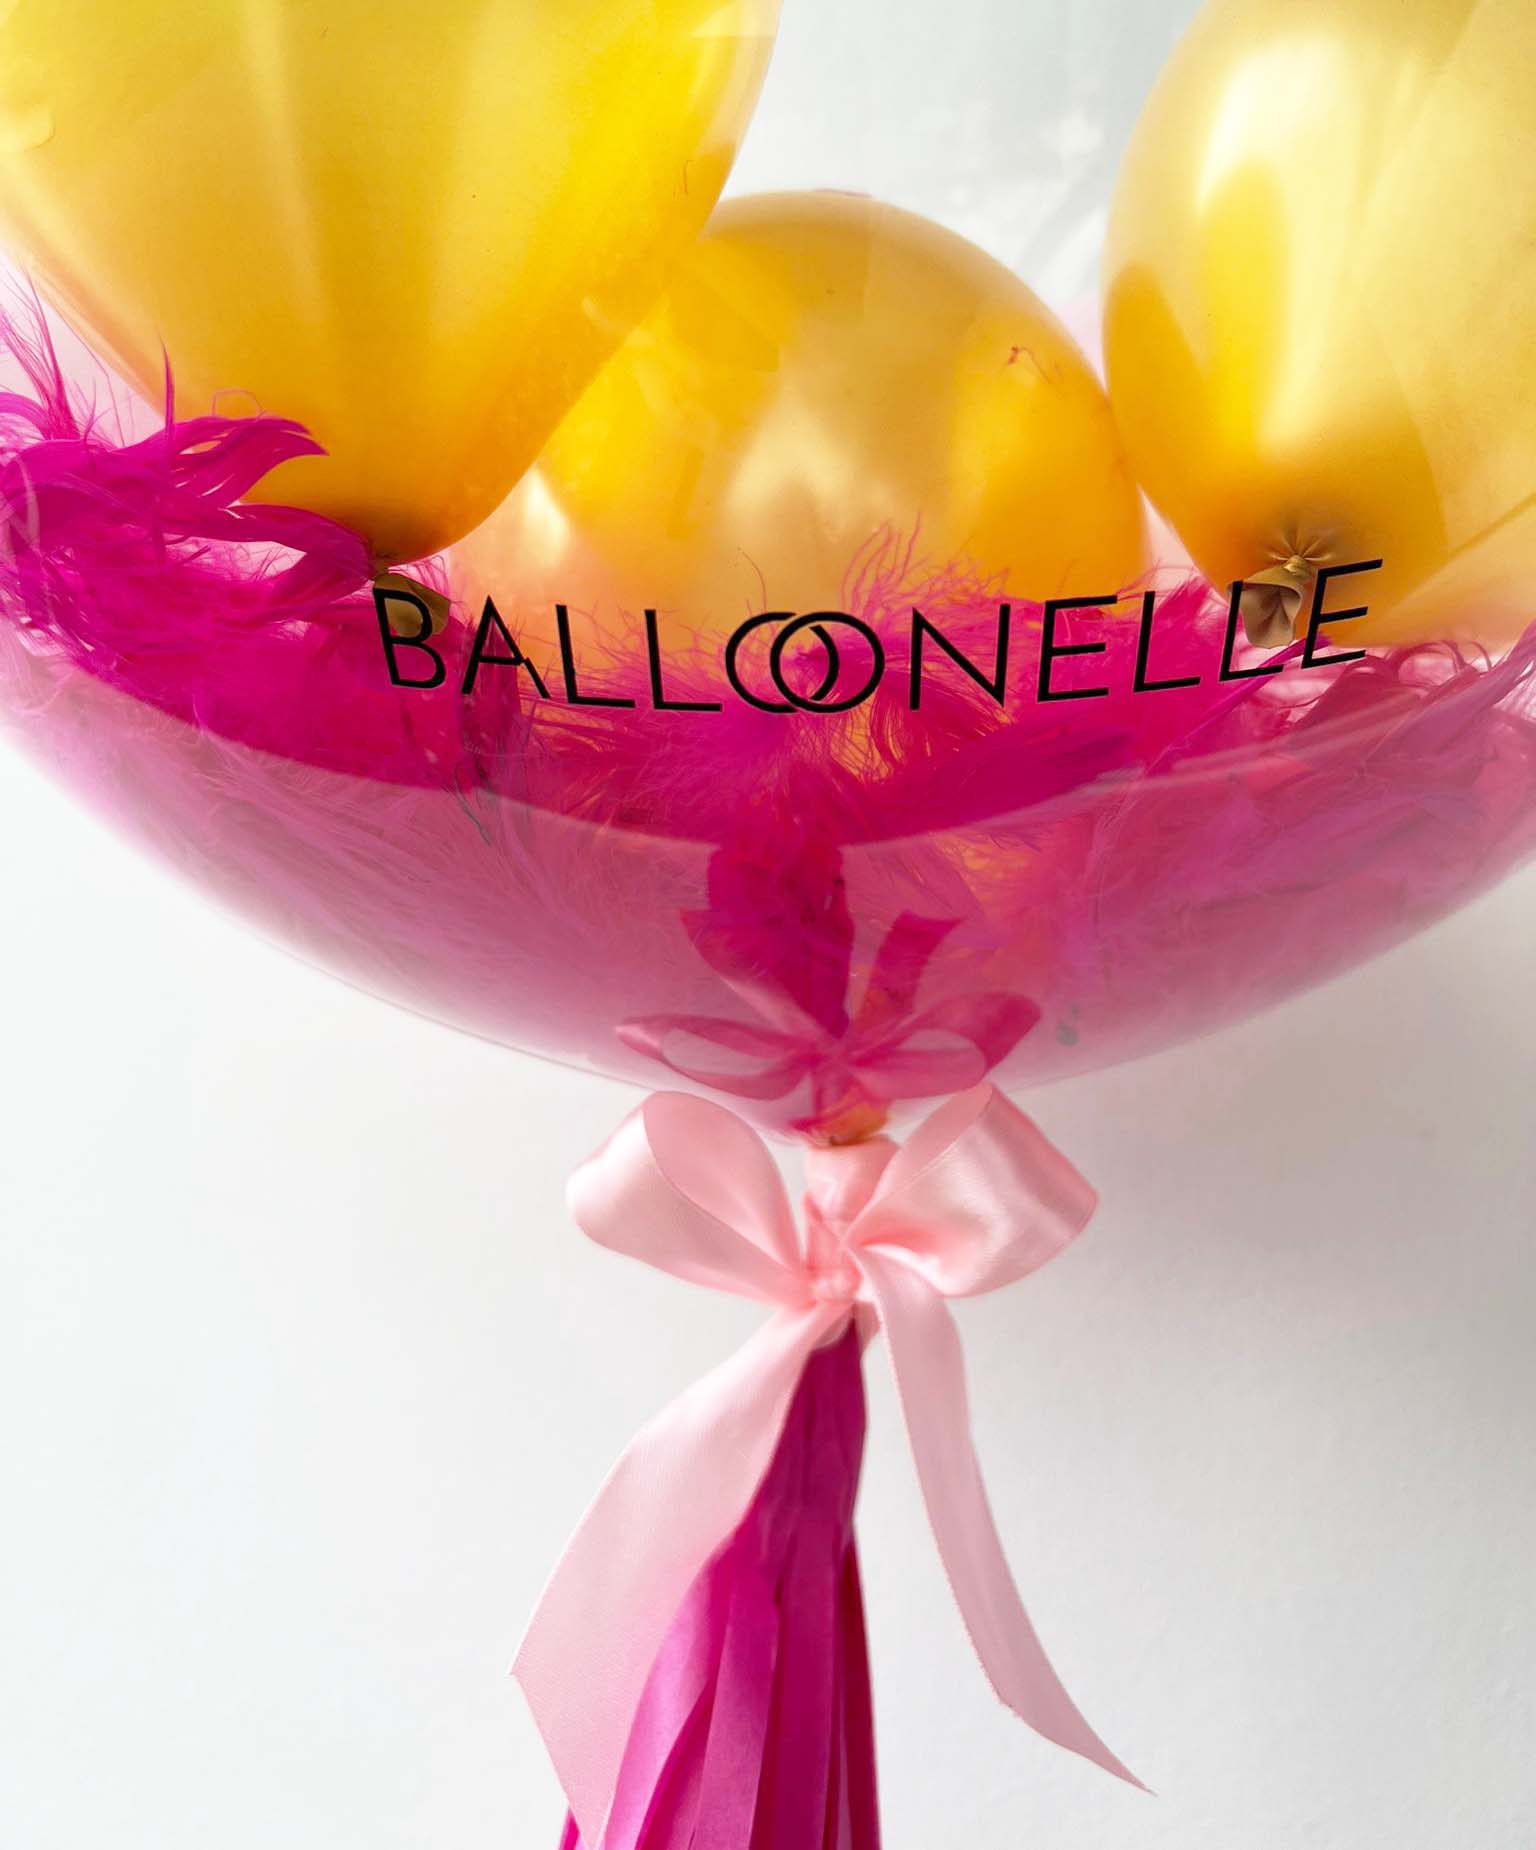 Gouden Confetti Doopgeschenk Designer Ballon